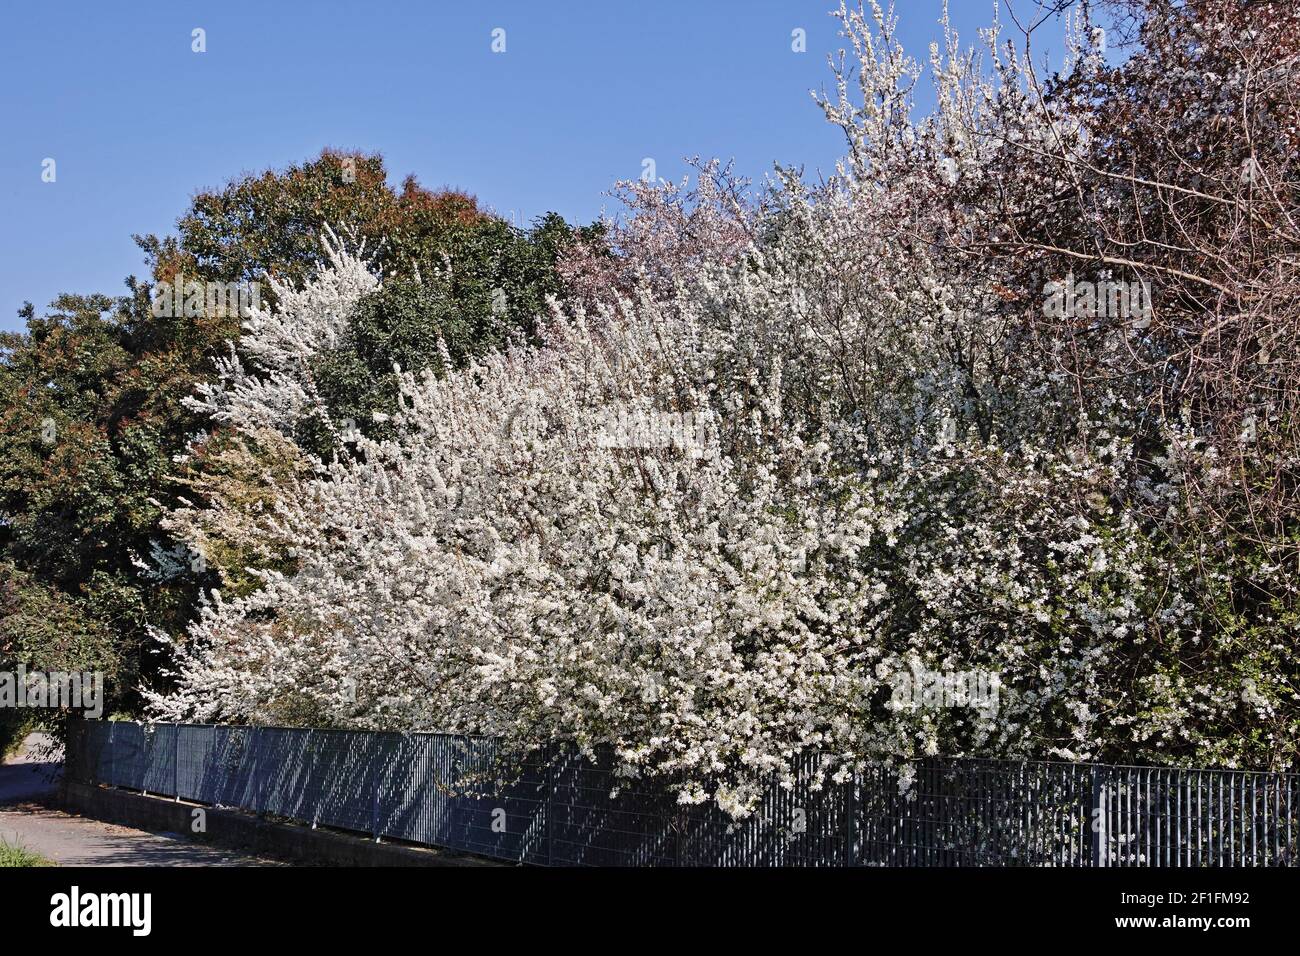 grande arbusto di spina nera in piena fioritura, prunus spinosa, rosacee Foto Stock